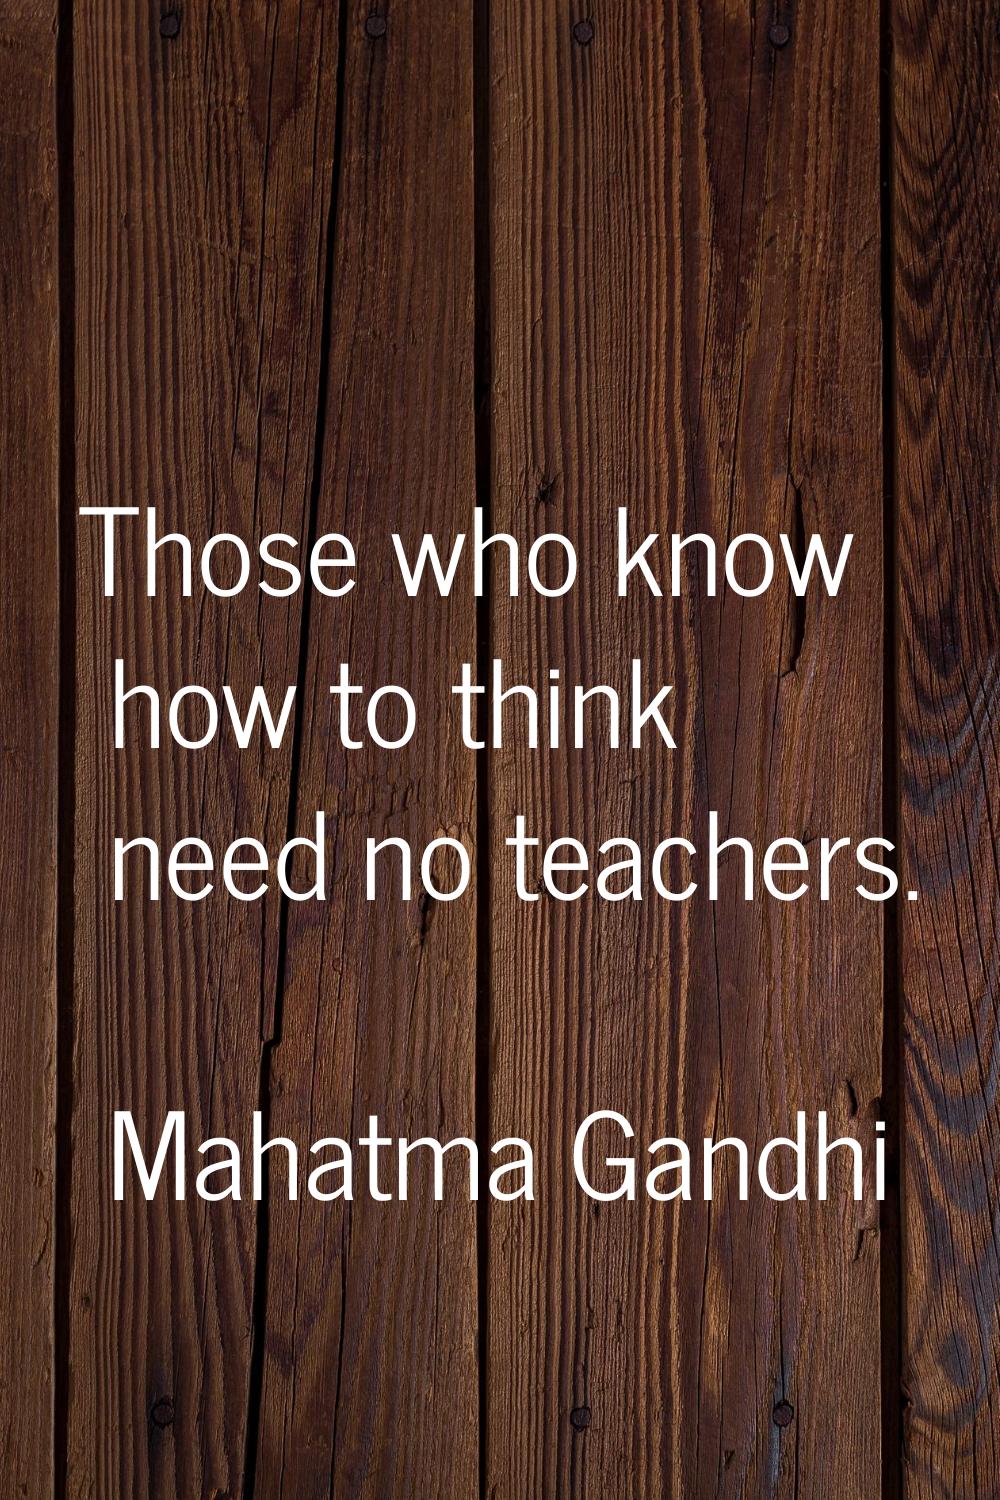 Those who know how to think need no teachers.